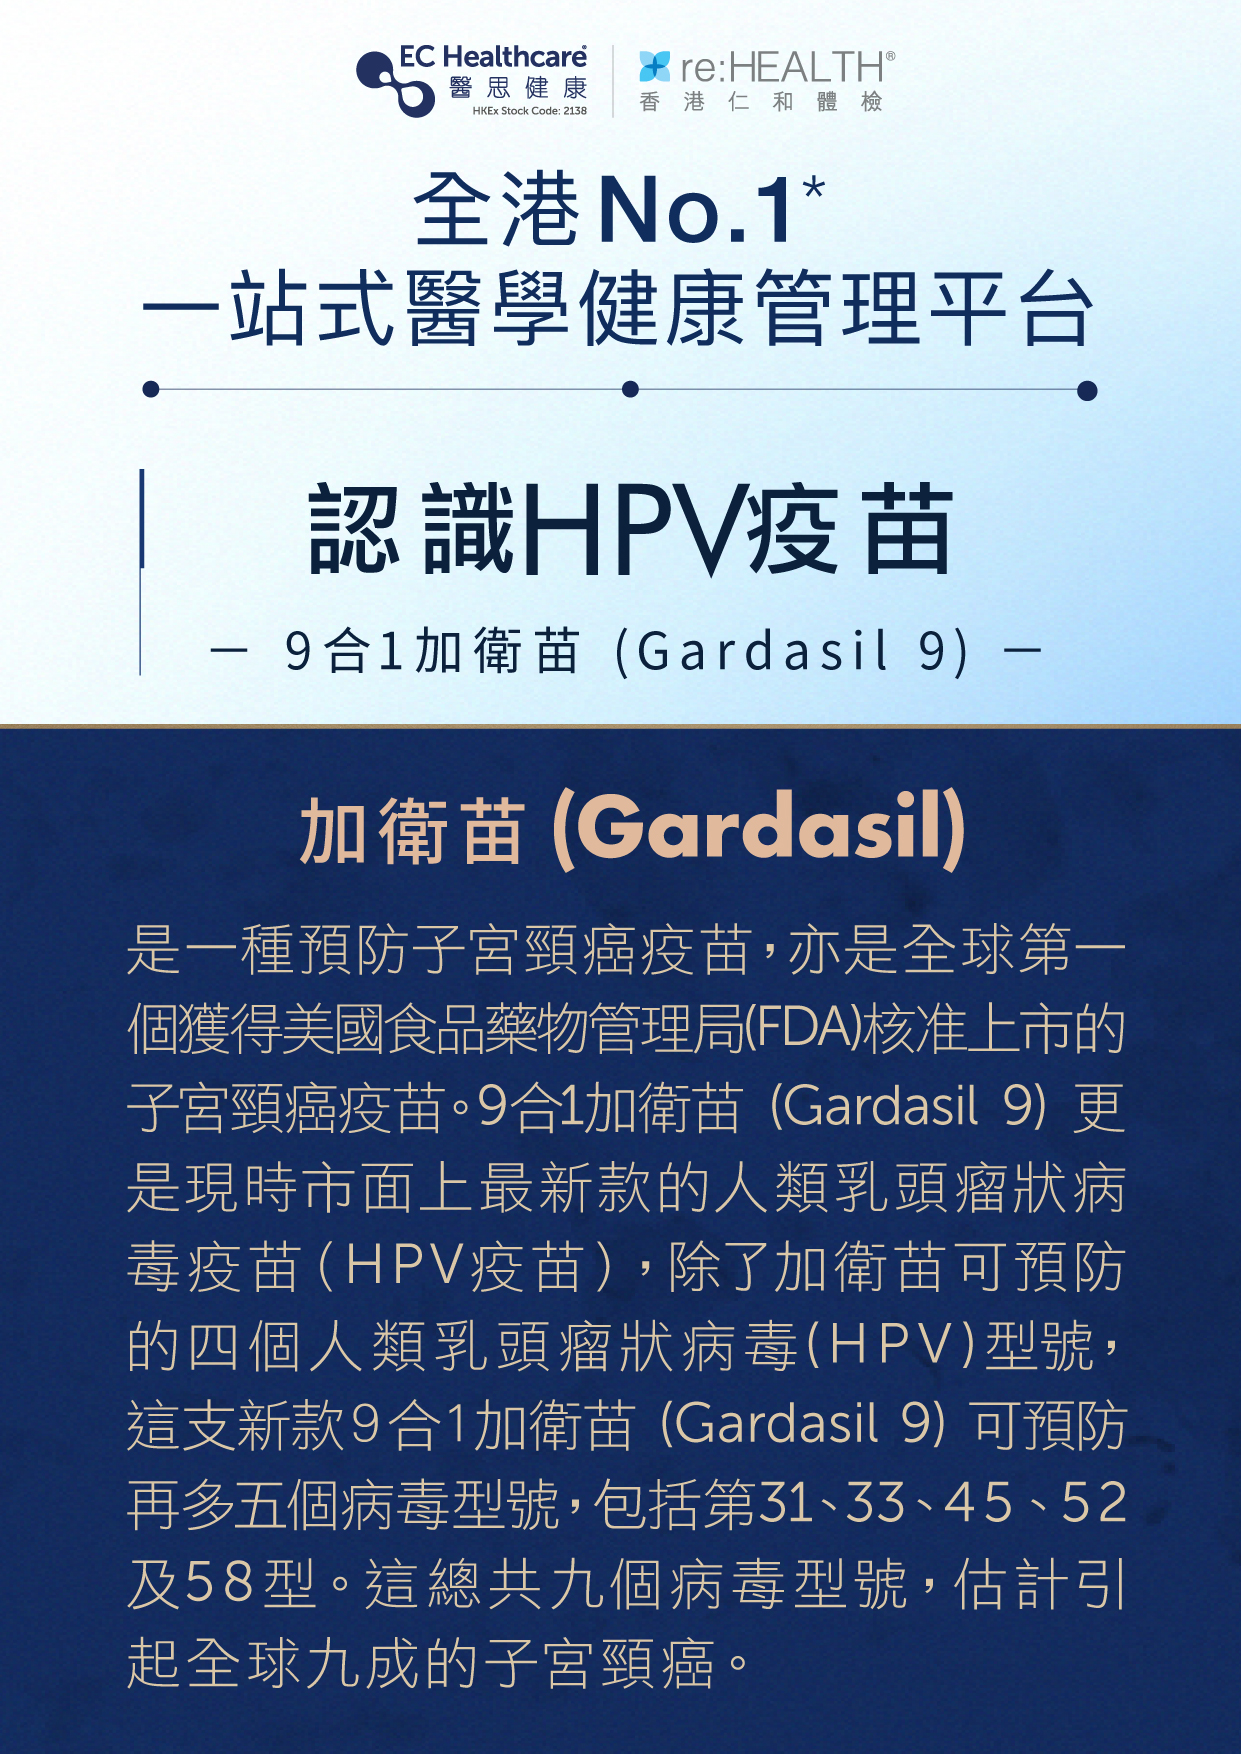 20230331_RH HPV(Alipay)_p2p v5(eshop)-01.jpg